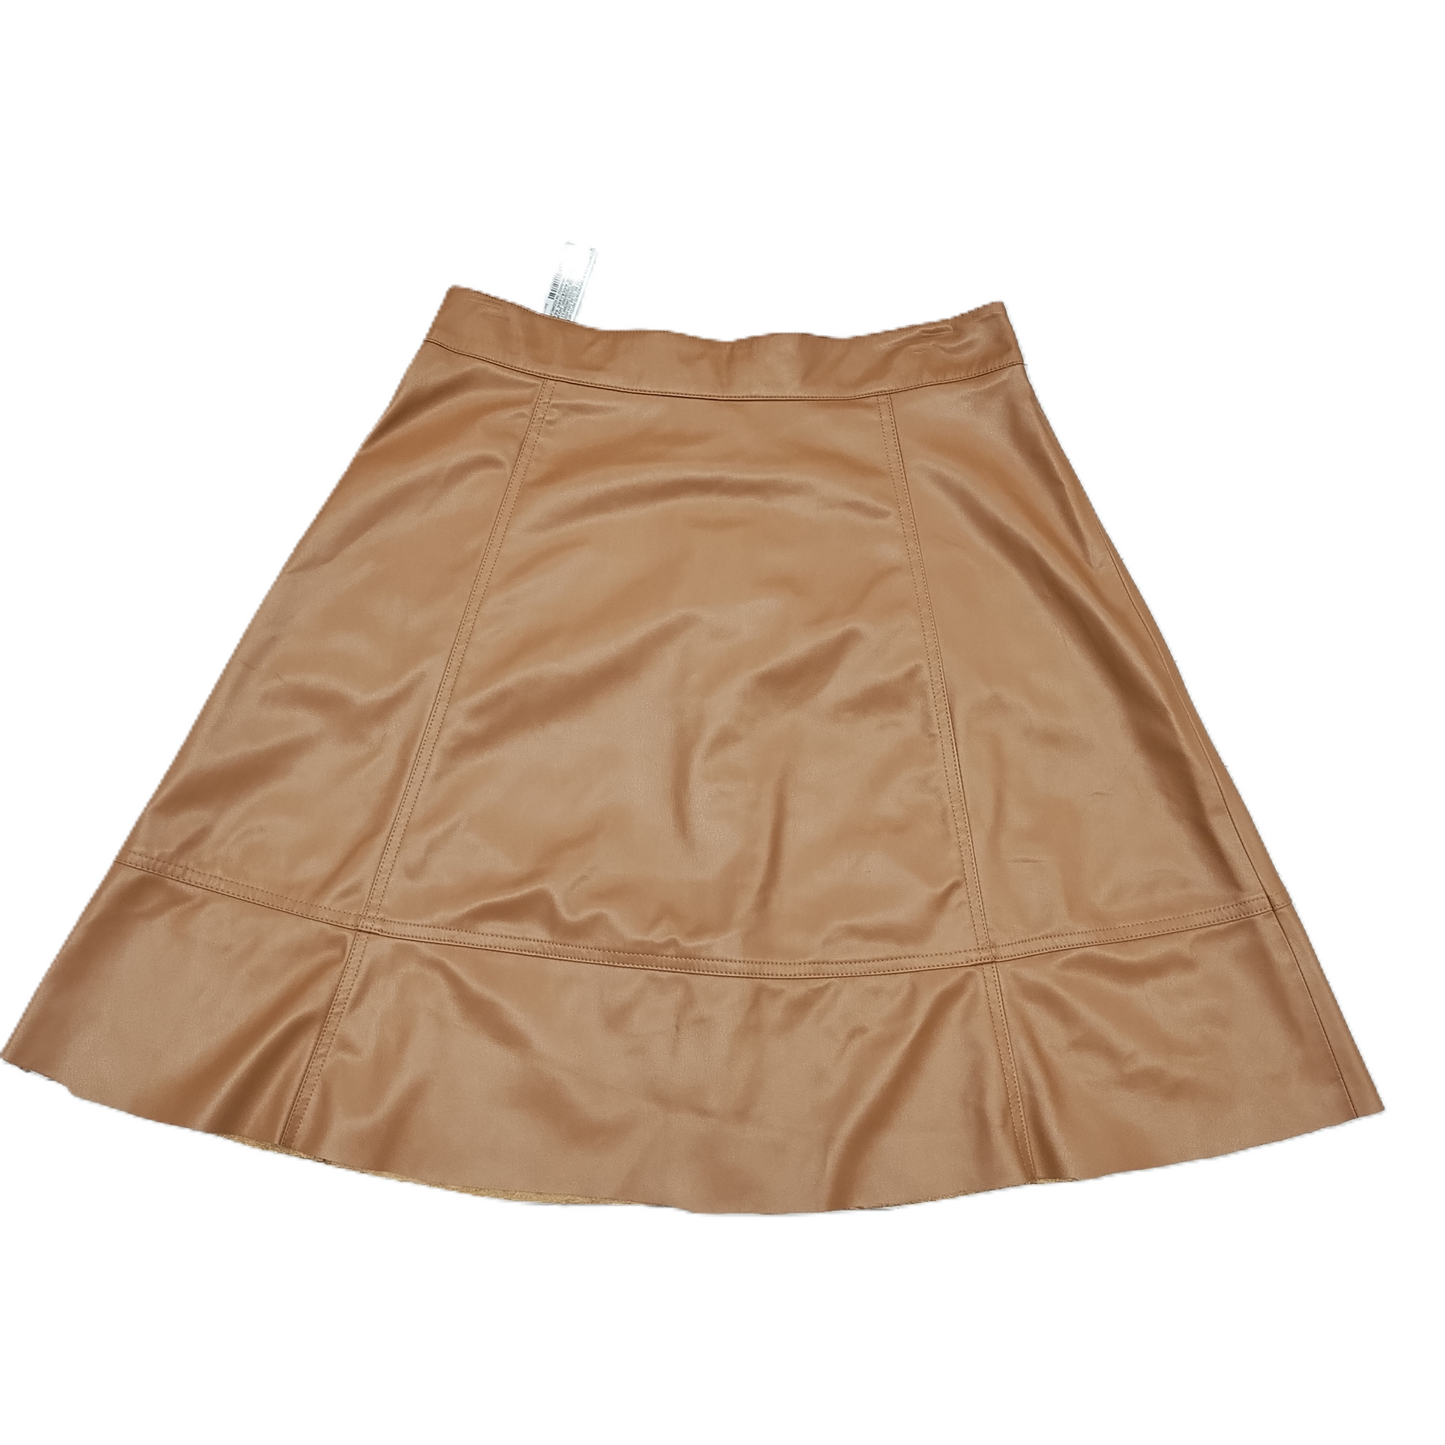 Skirt Midi By Zara  Size: L